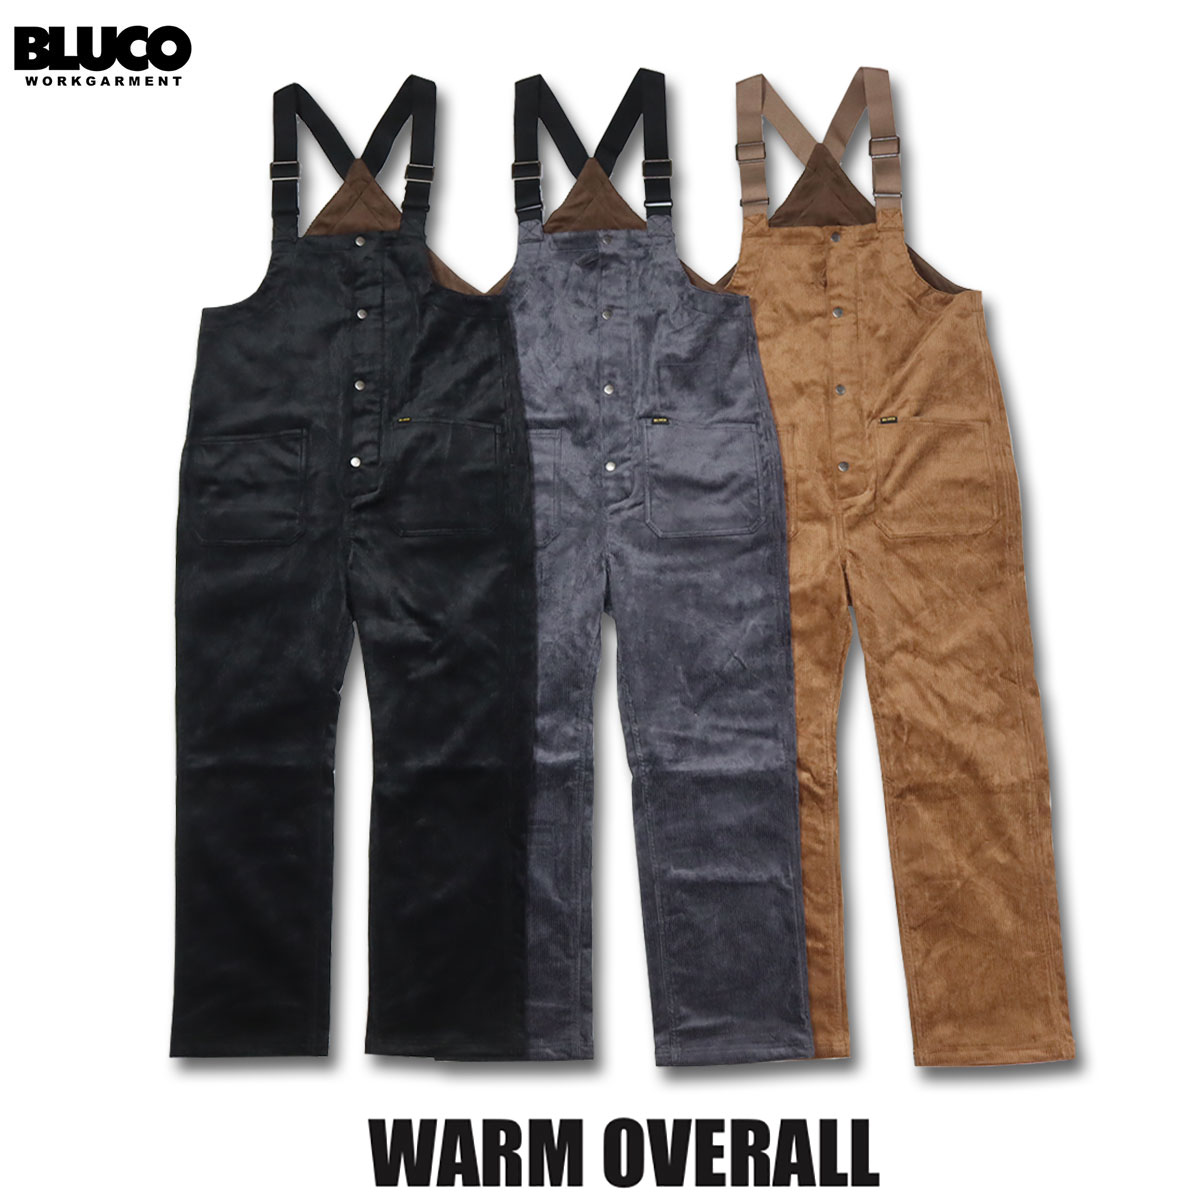 BLUCO(ブルコ) OL-1036 WARM OVERALL 3色(BRN/BLK/GRY)☆送料無料 